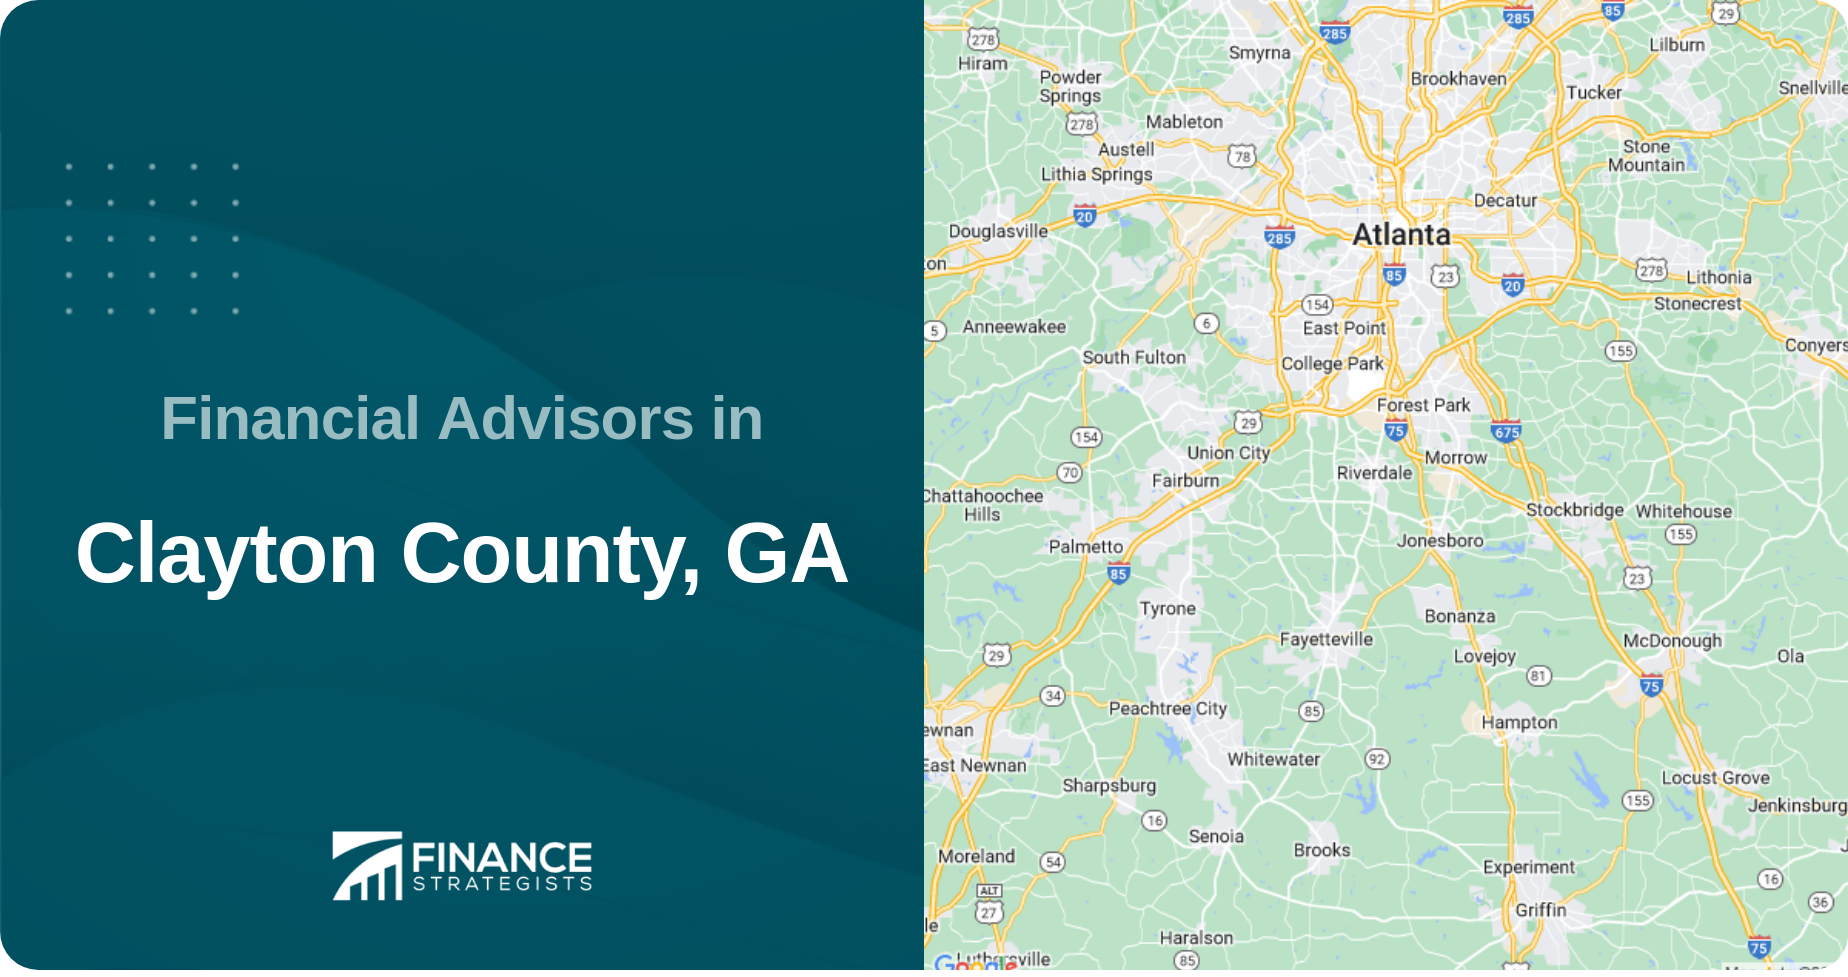 Financial Advisors in Clayton County, GA